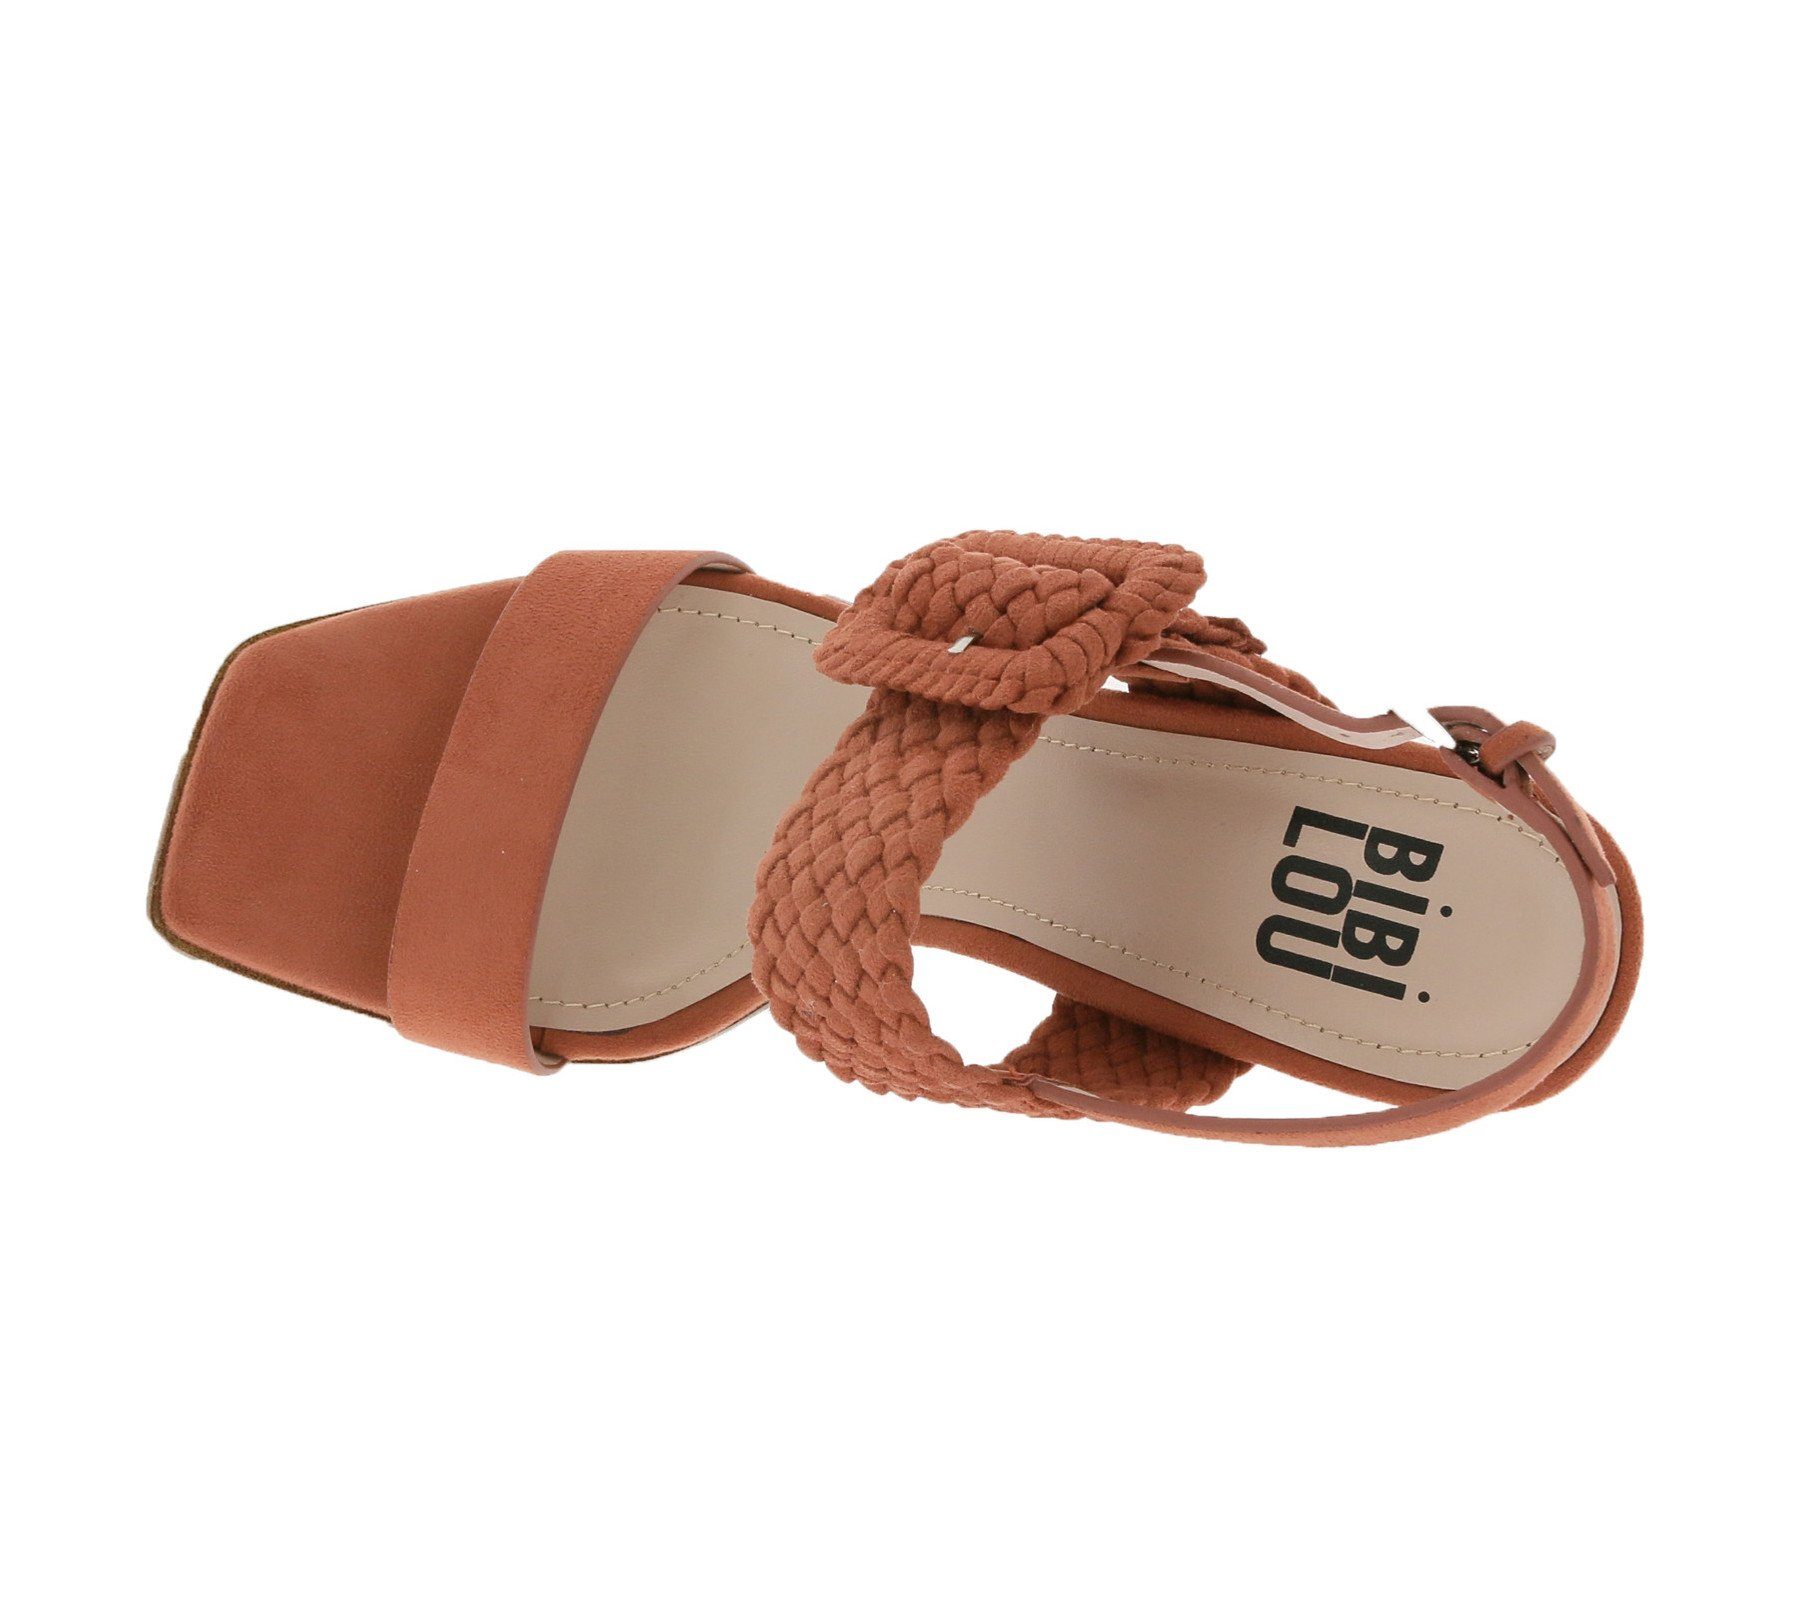 Bibi Lou BIBI LOU Absatz-Sandalen Dunkelrosa schicke mit Damen Sandalette geflochtenen Outdoorschuh Freizeit-Sandalette Verzierungen